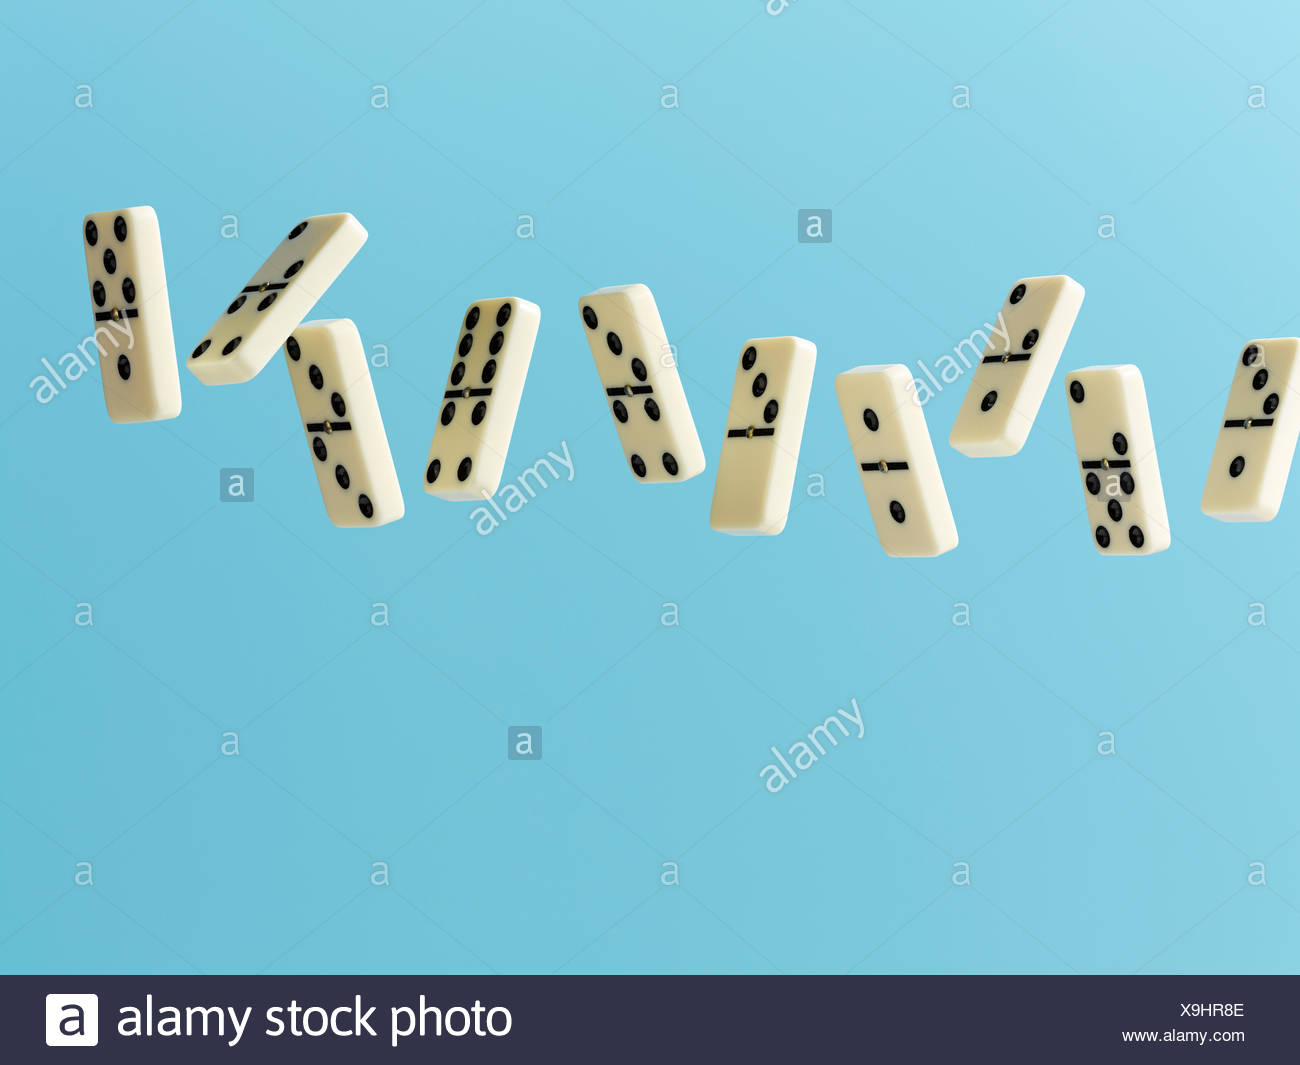 Floating dominos on blue background Stock Photo 281289246